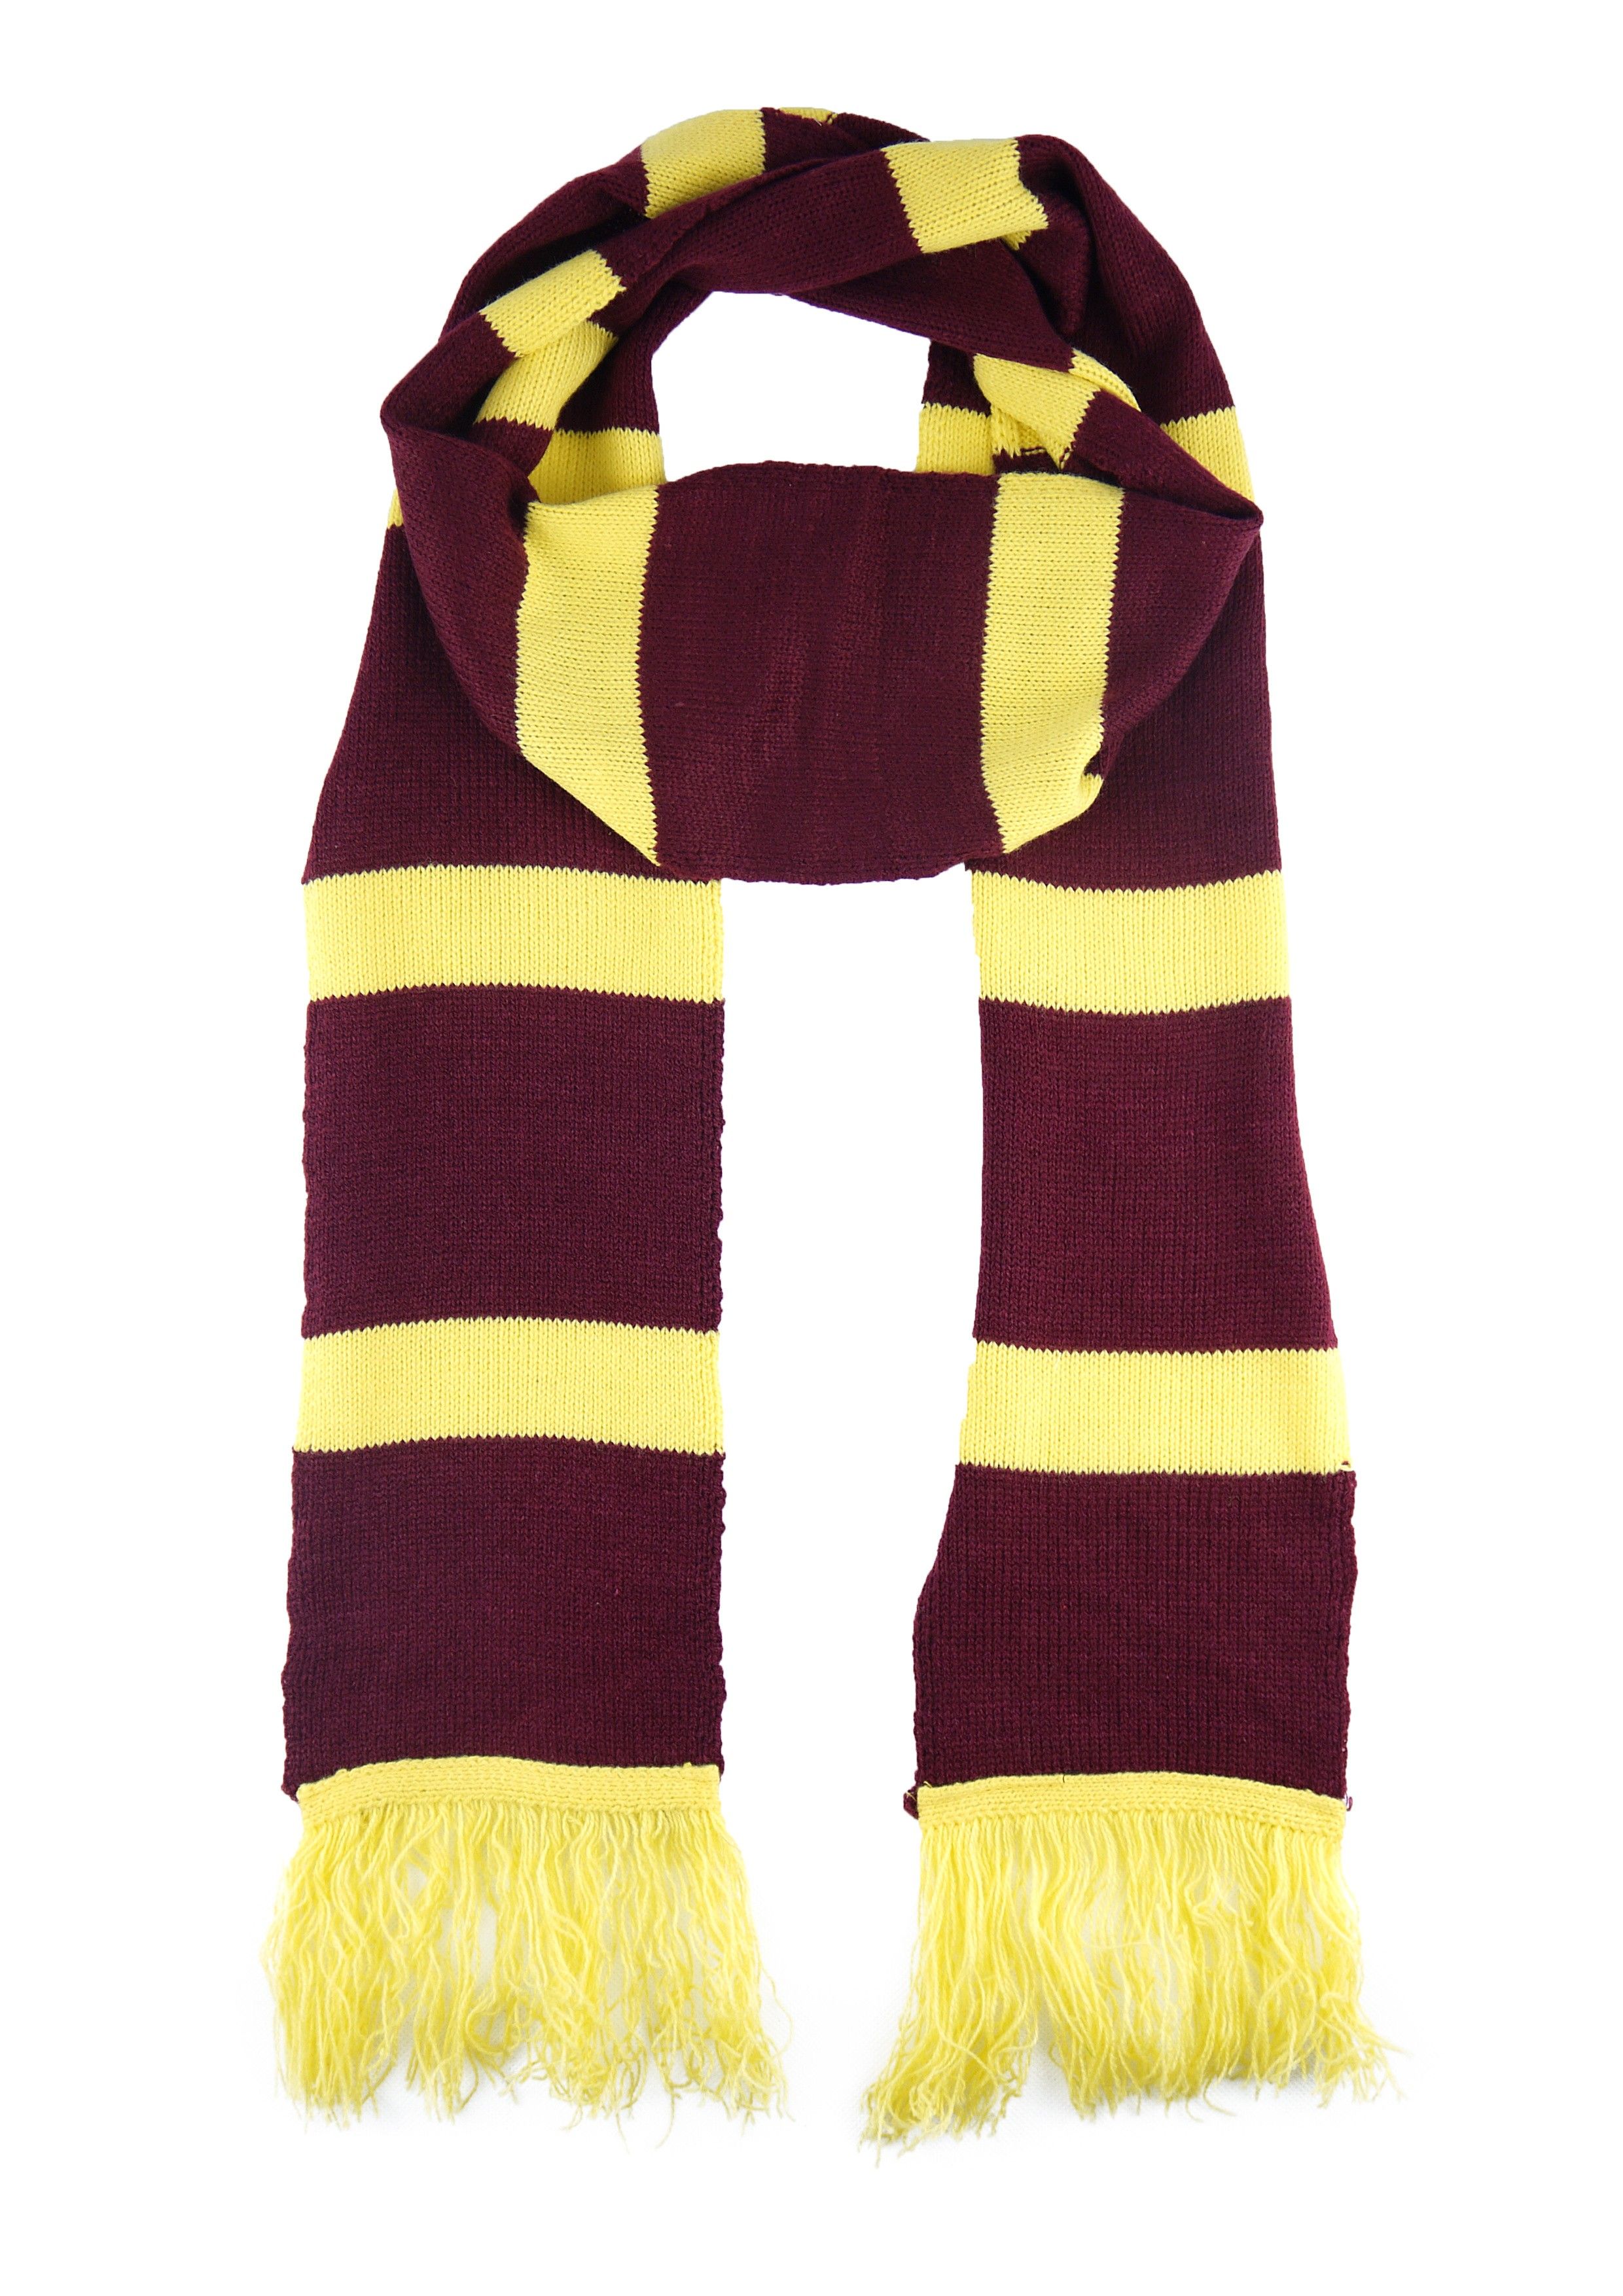 Harry Potter sjaal kopen? Confettifeest.nl